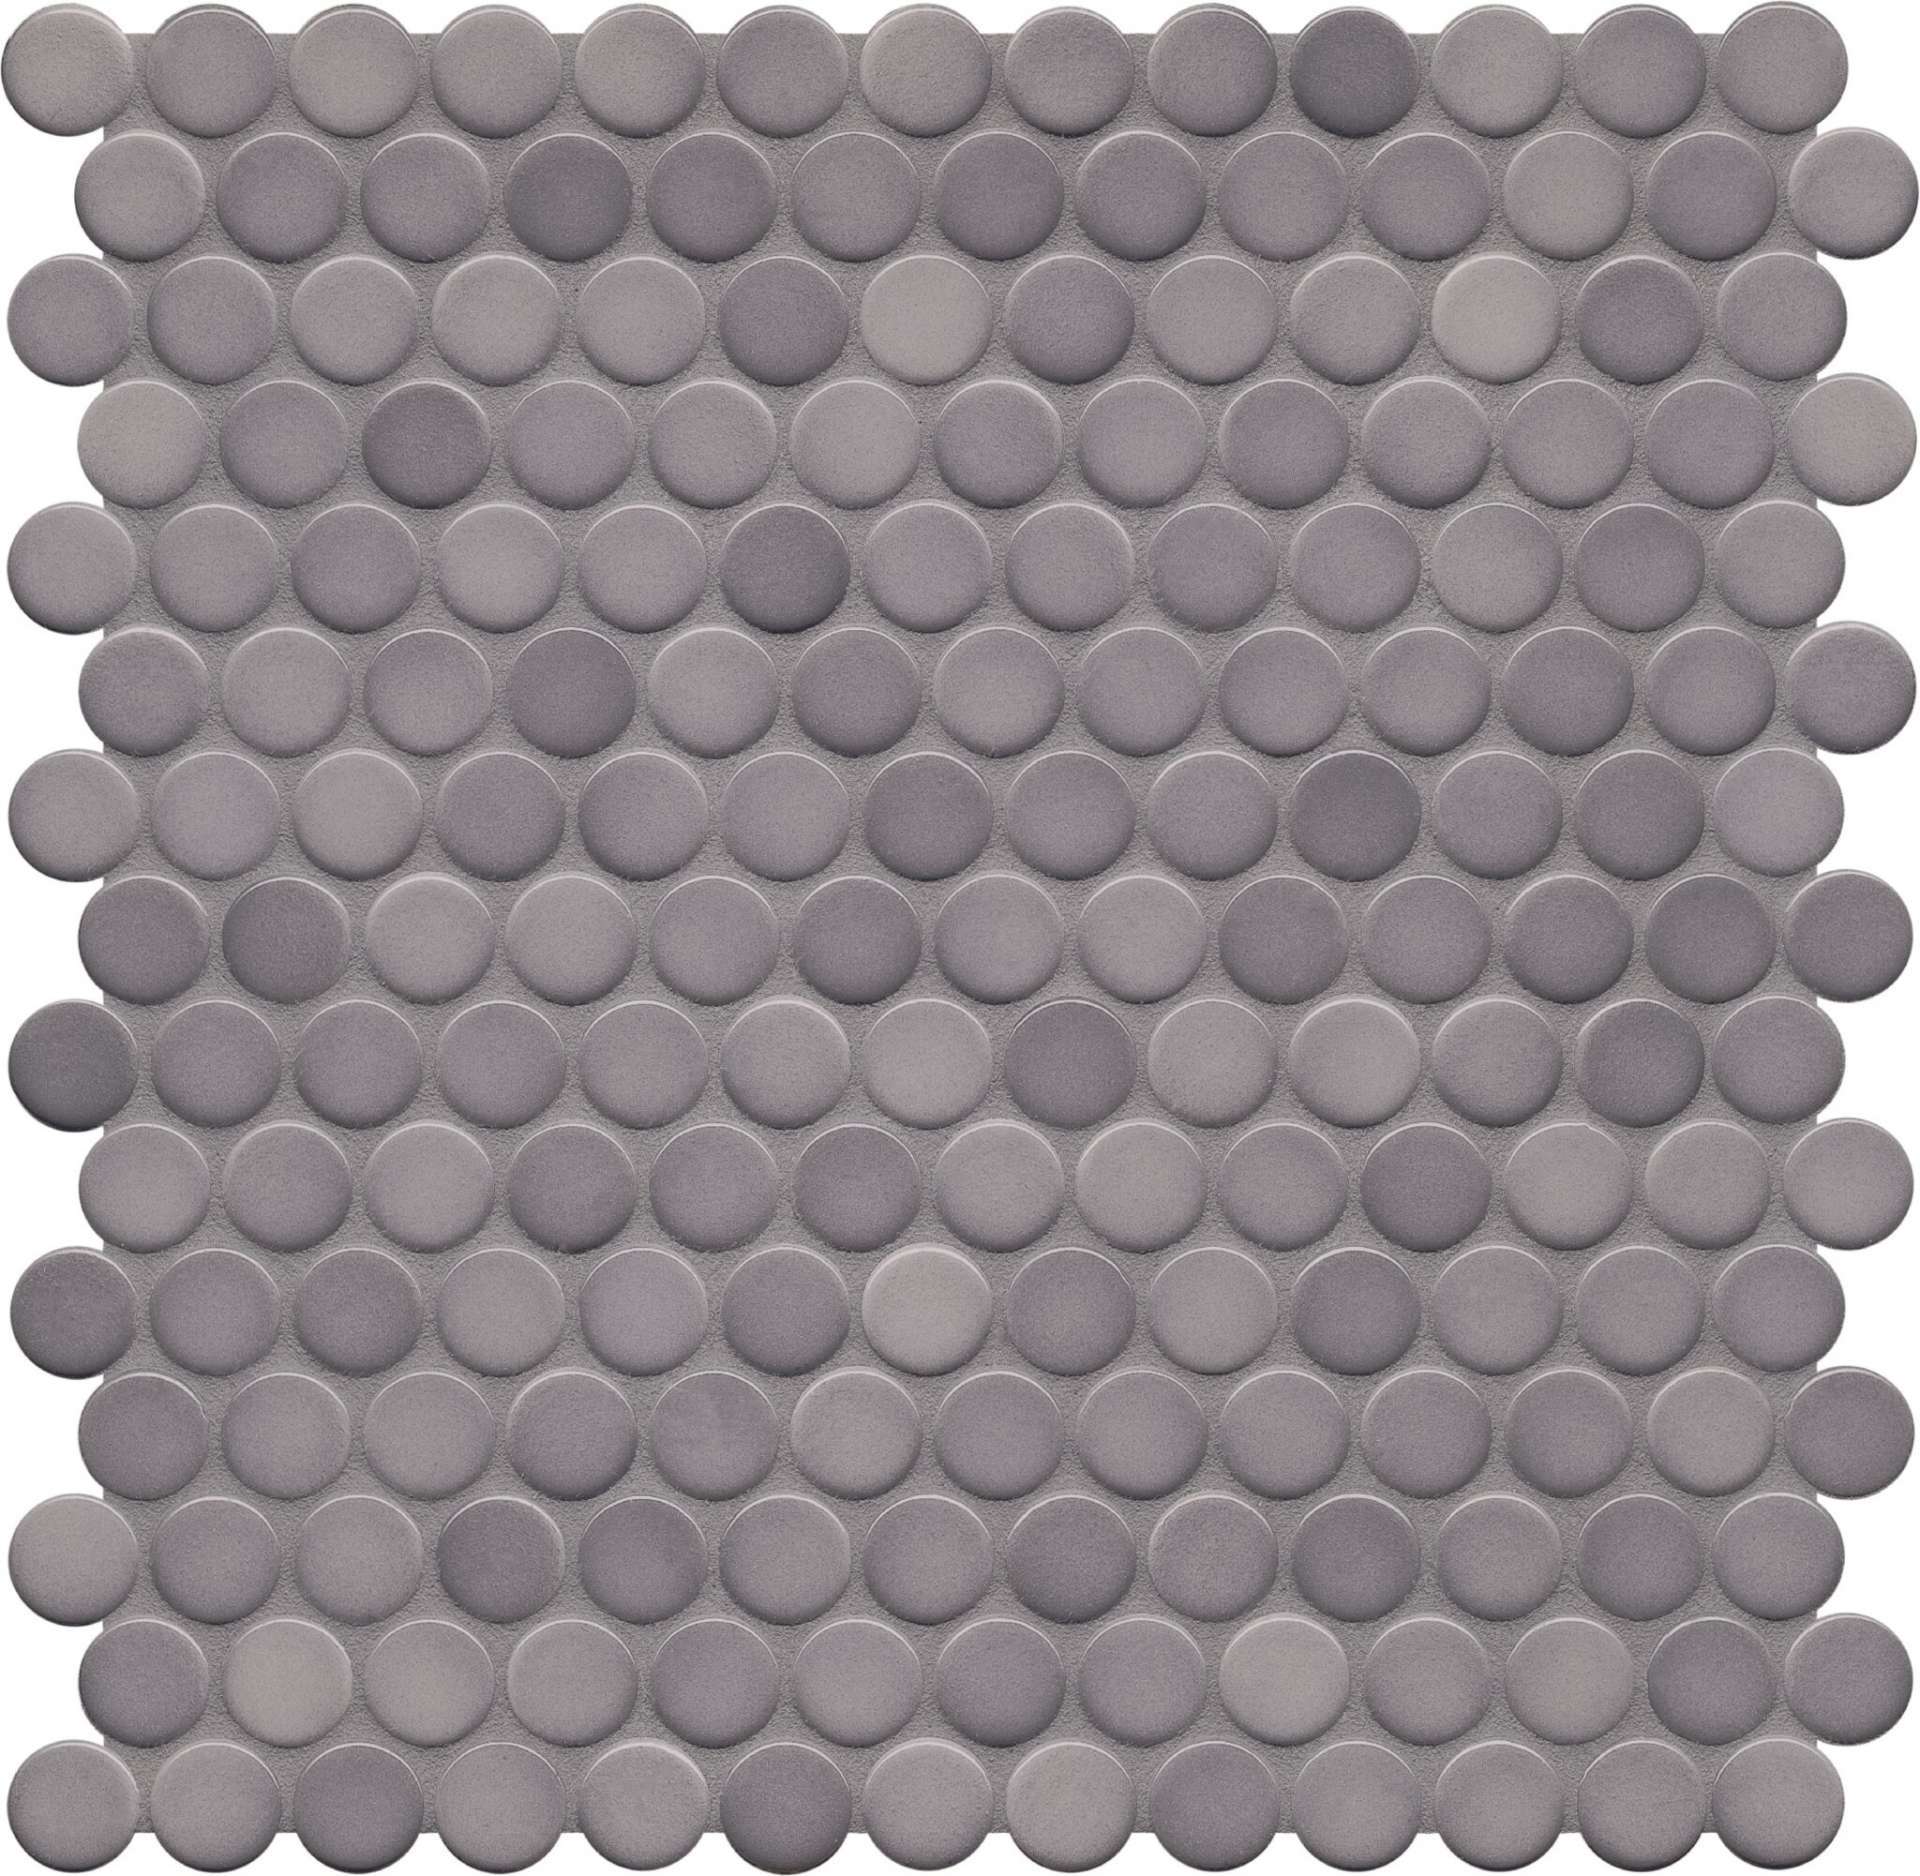 Мозаика Jasba Loop Diamantgrau 40025H-44, цвет серый, поверхность глянцевая, круг и овал, 312x316